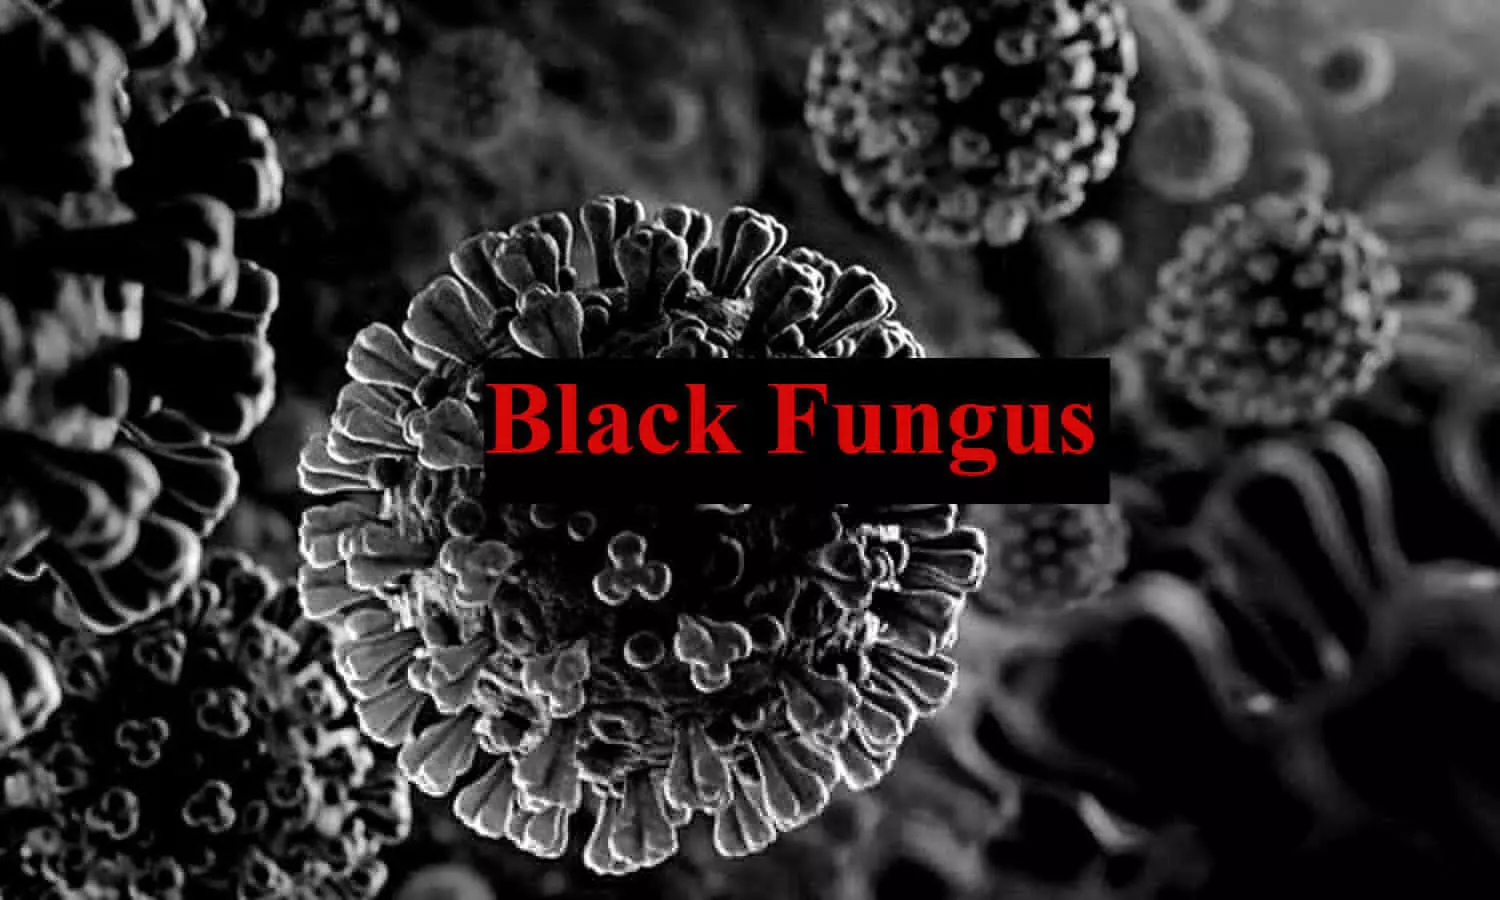 Black fungus in sultanpur